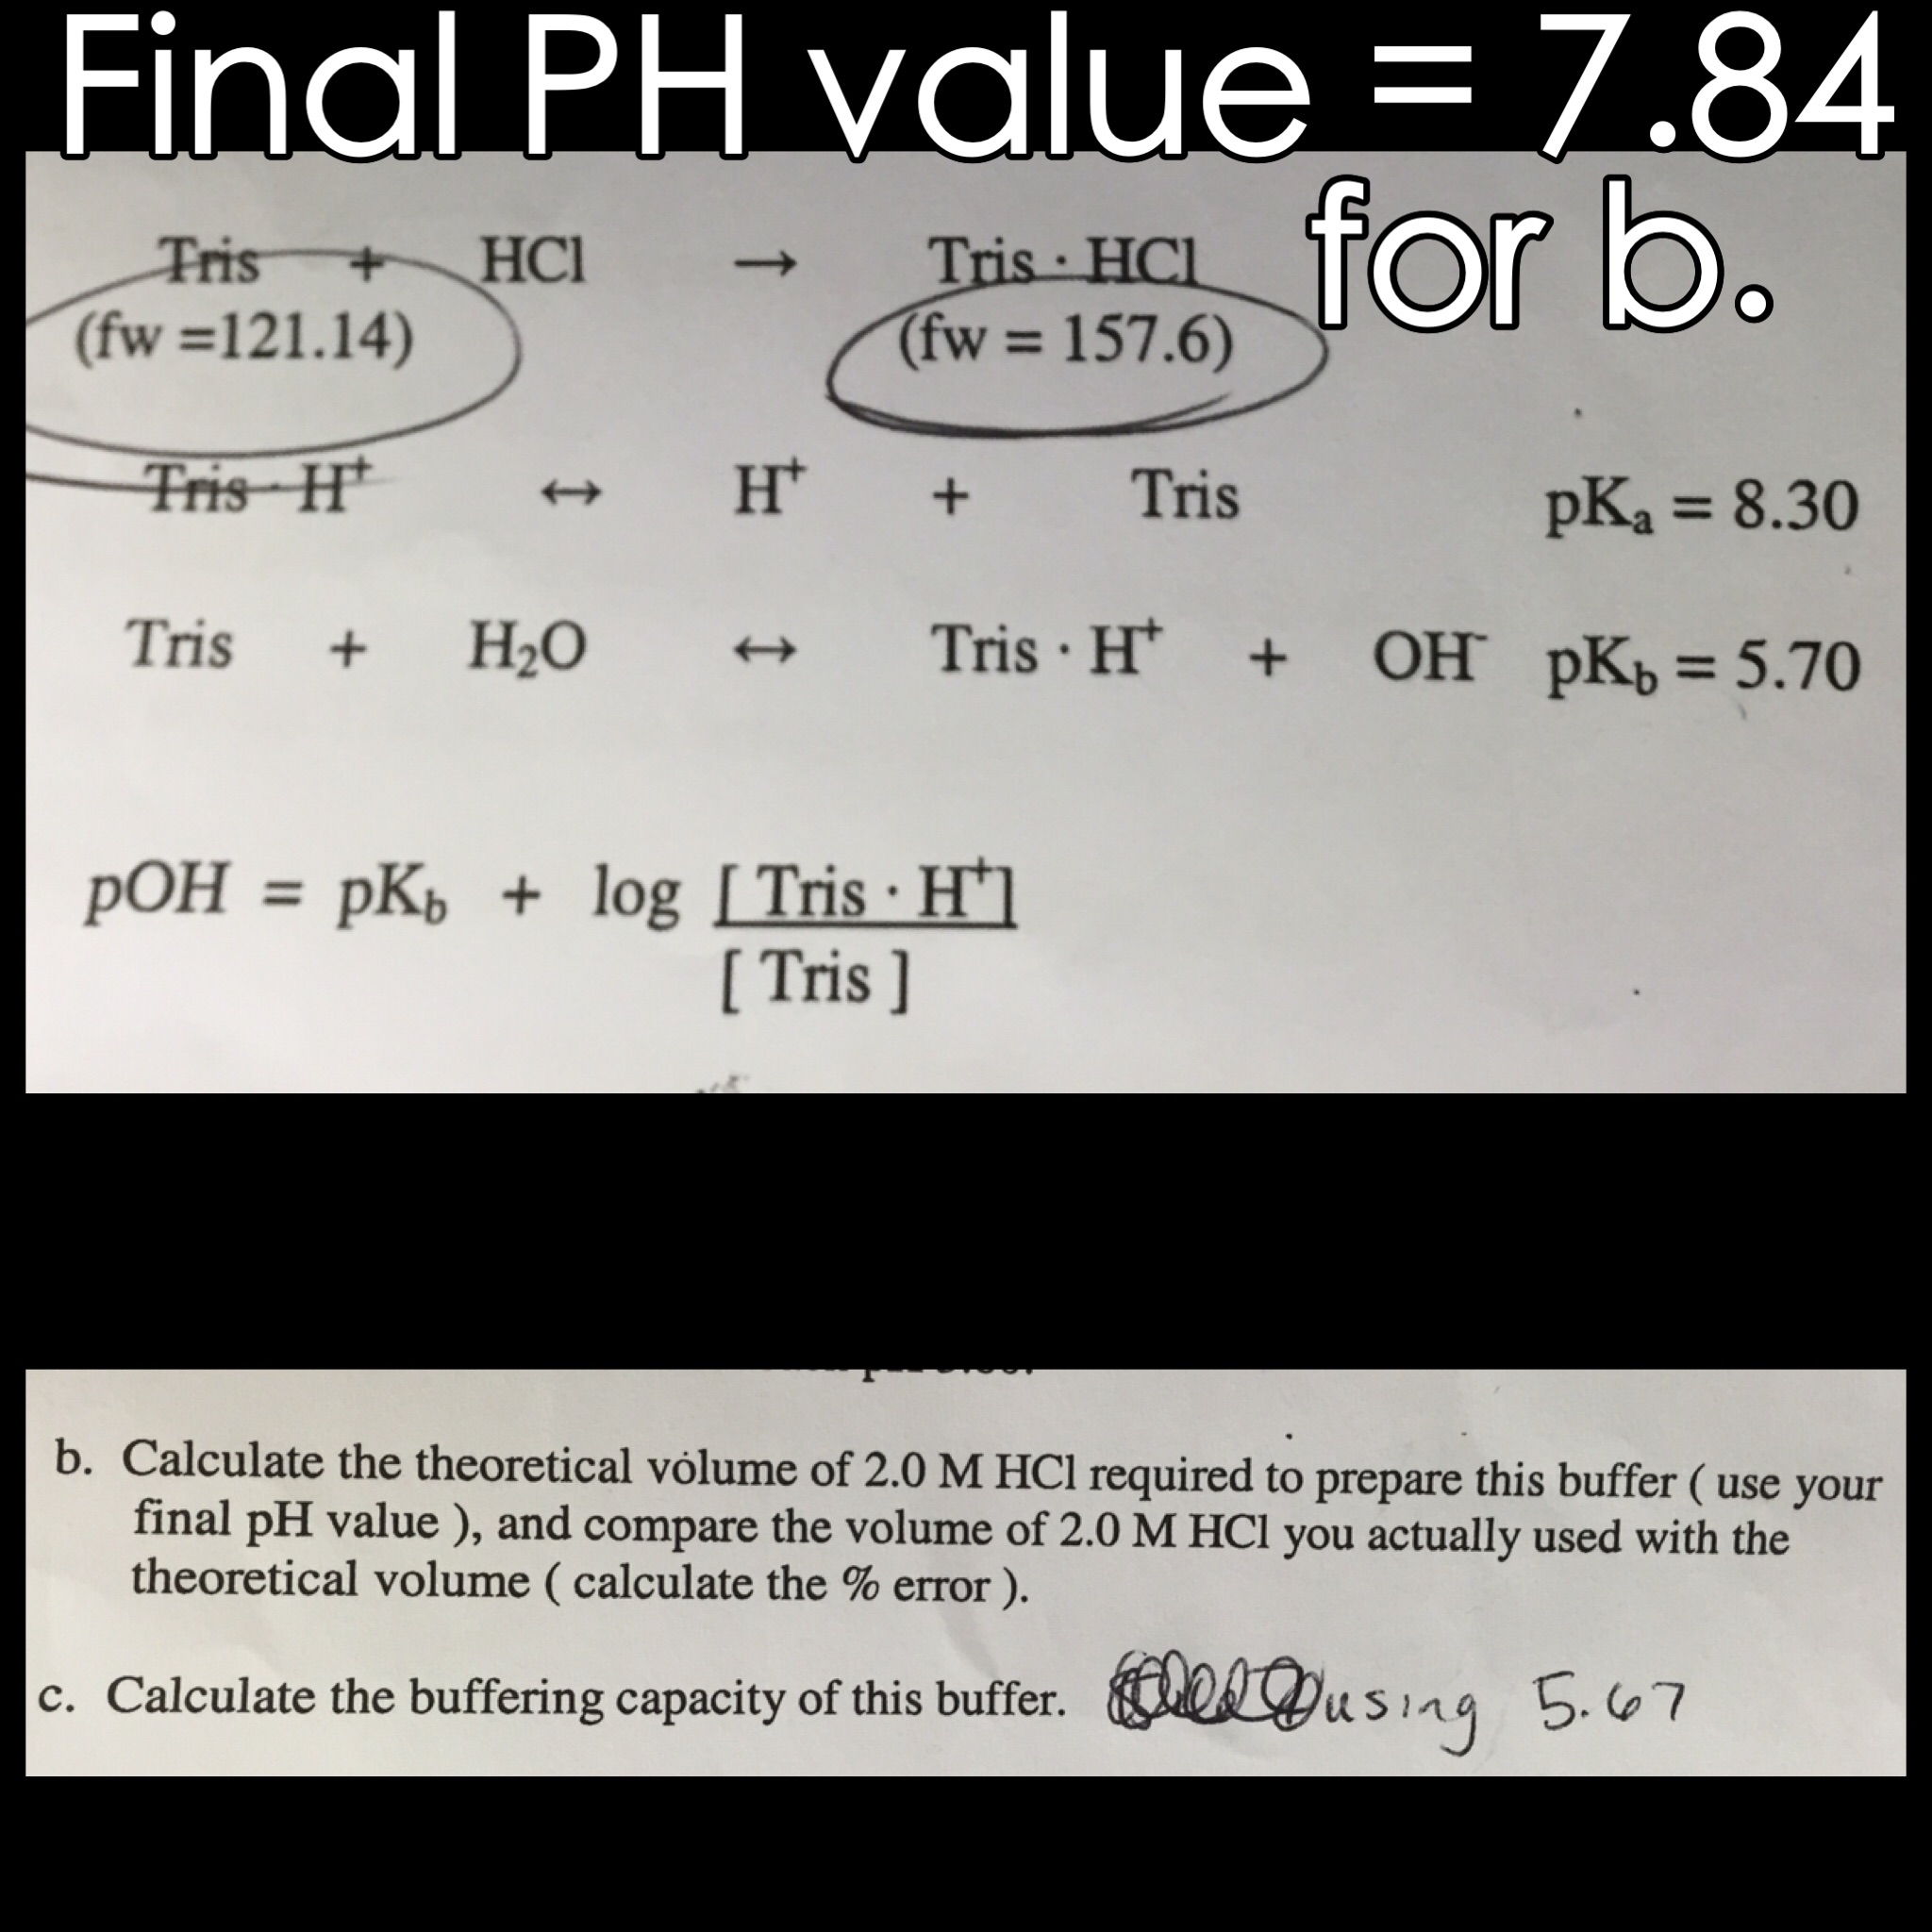 POH = PKb + Log [Tris . H+]/[Tris] Calculate The T...